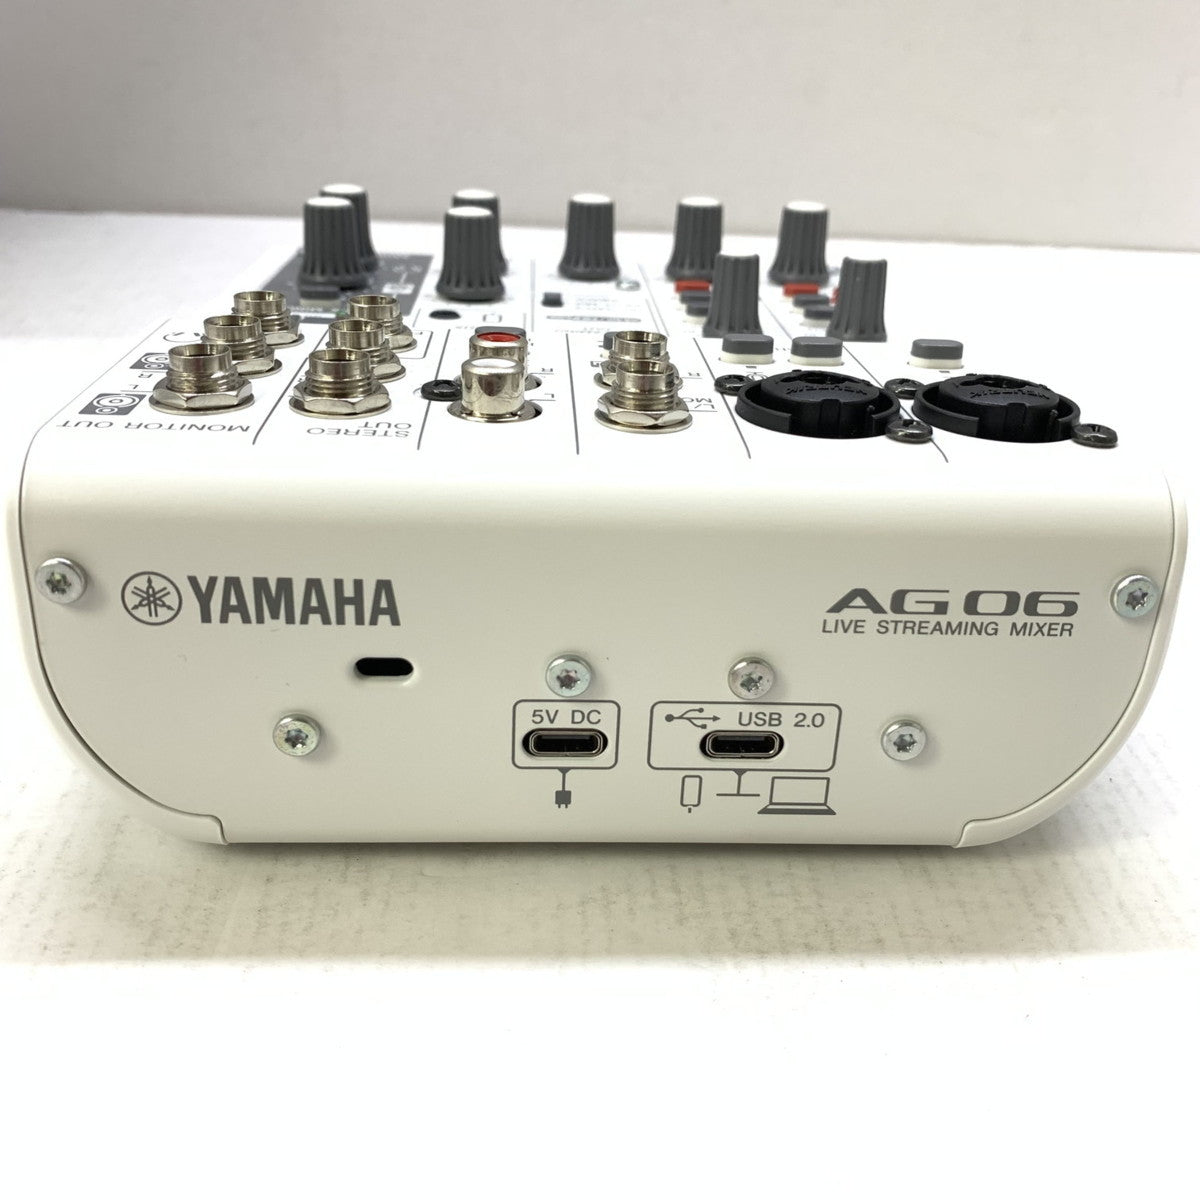 Yamaha Mezcladora Ag06mk2 para Streaming en Vivo